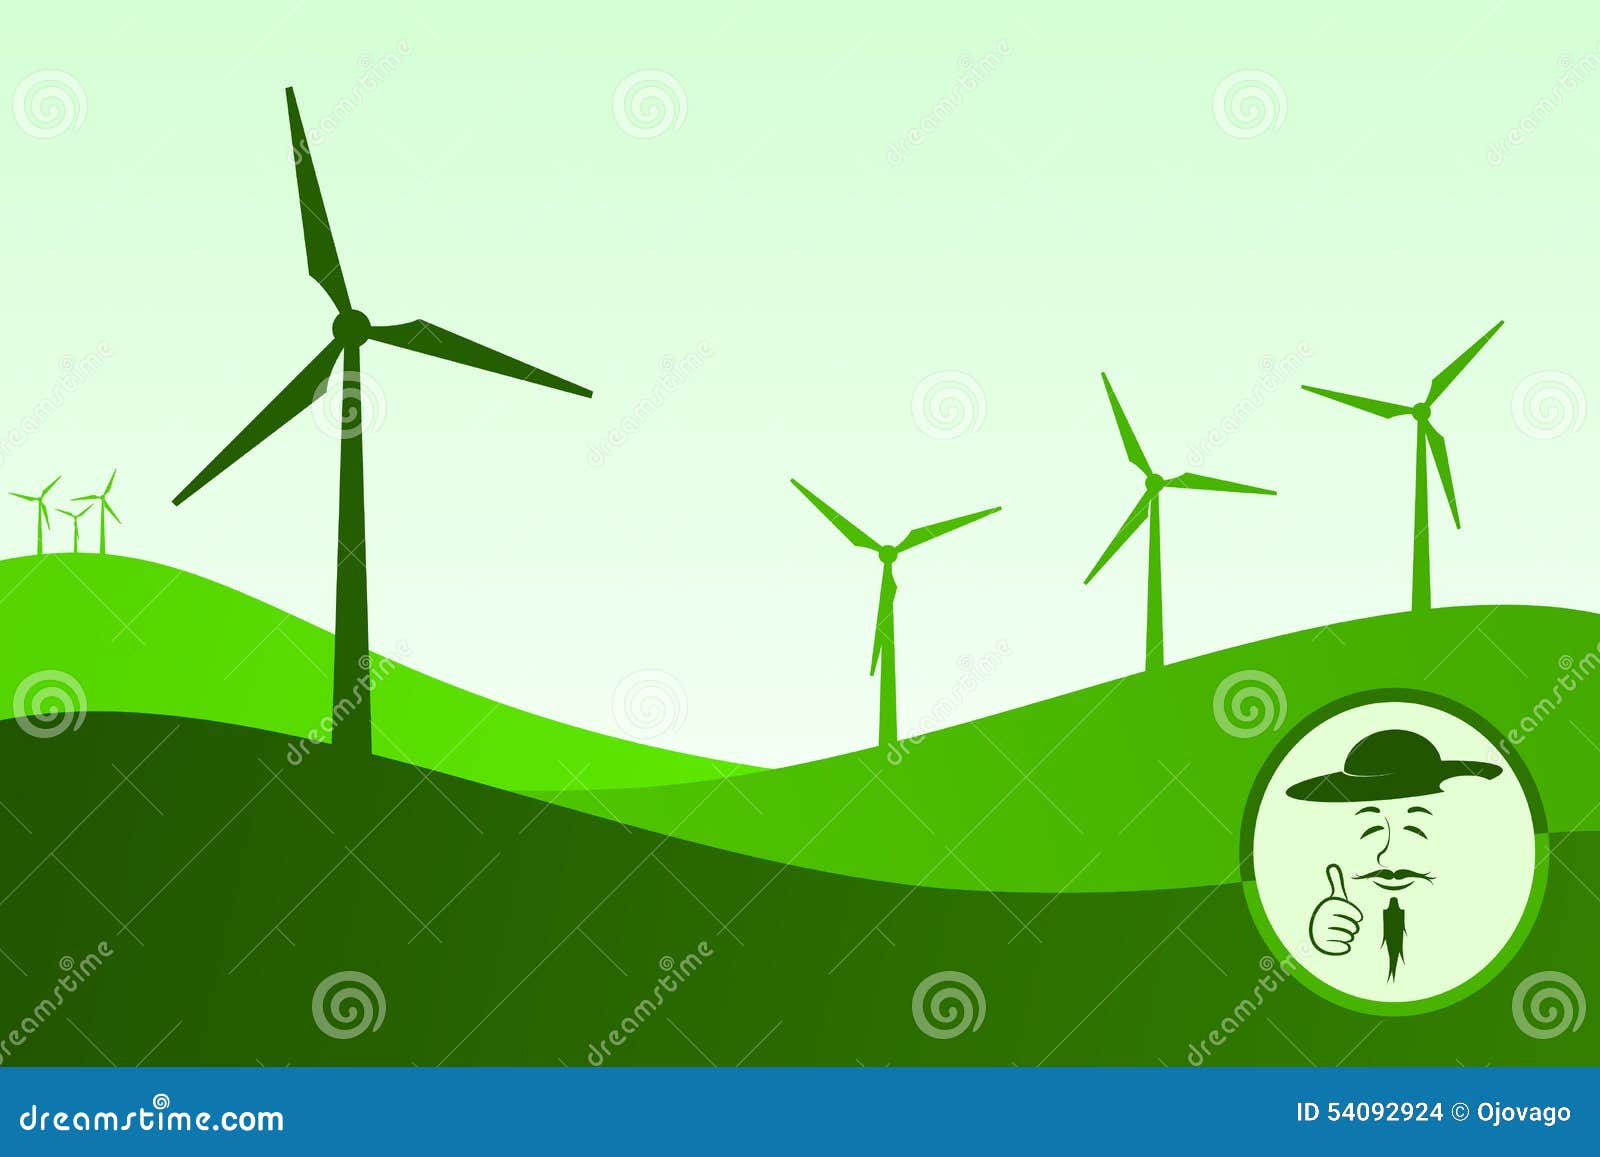 Don Quixote and the Windmills Vector Illustratie - Illustration of ...